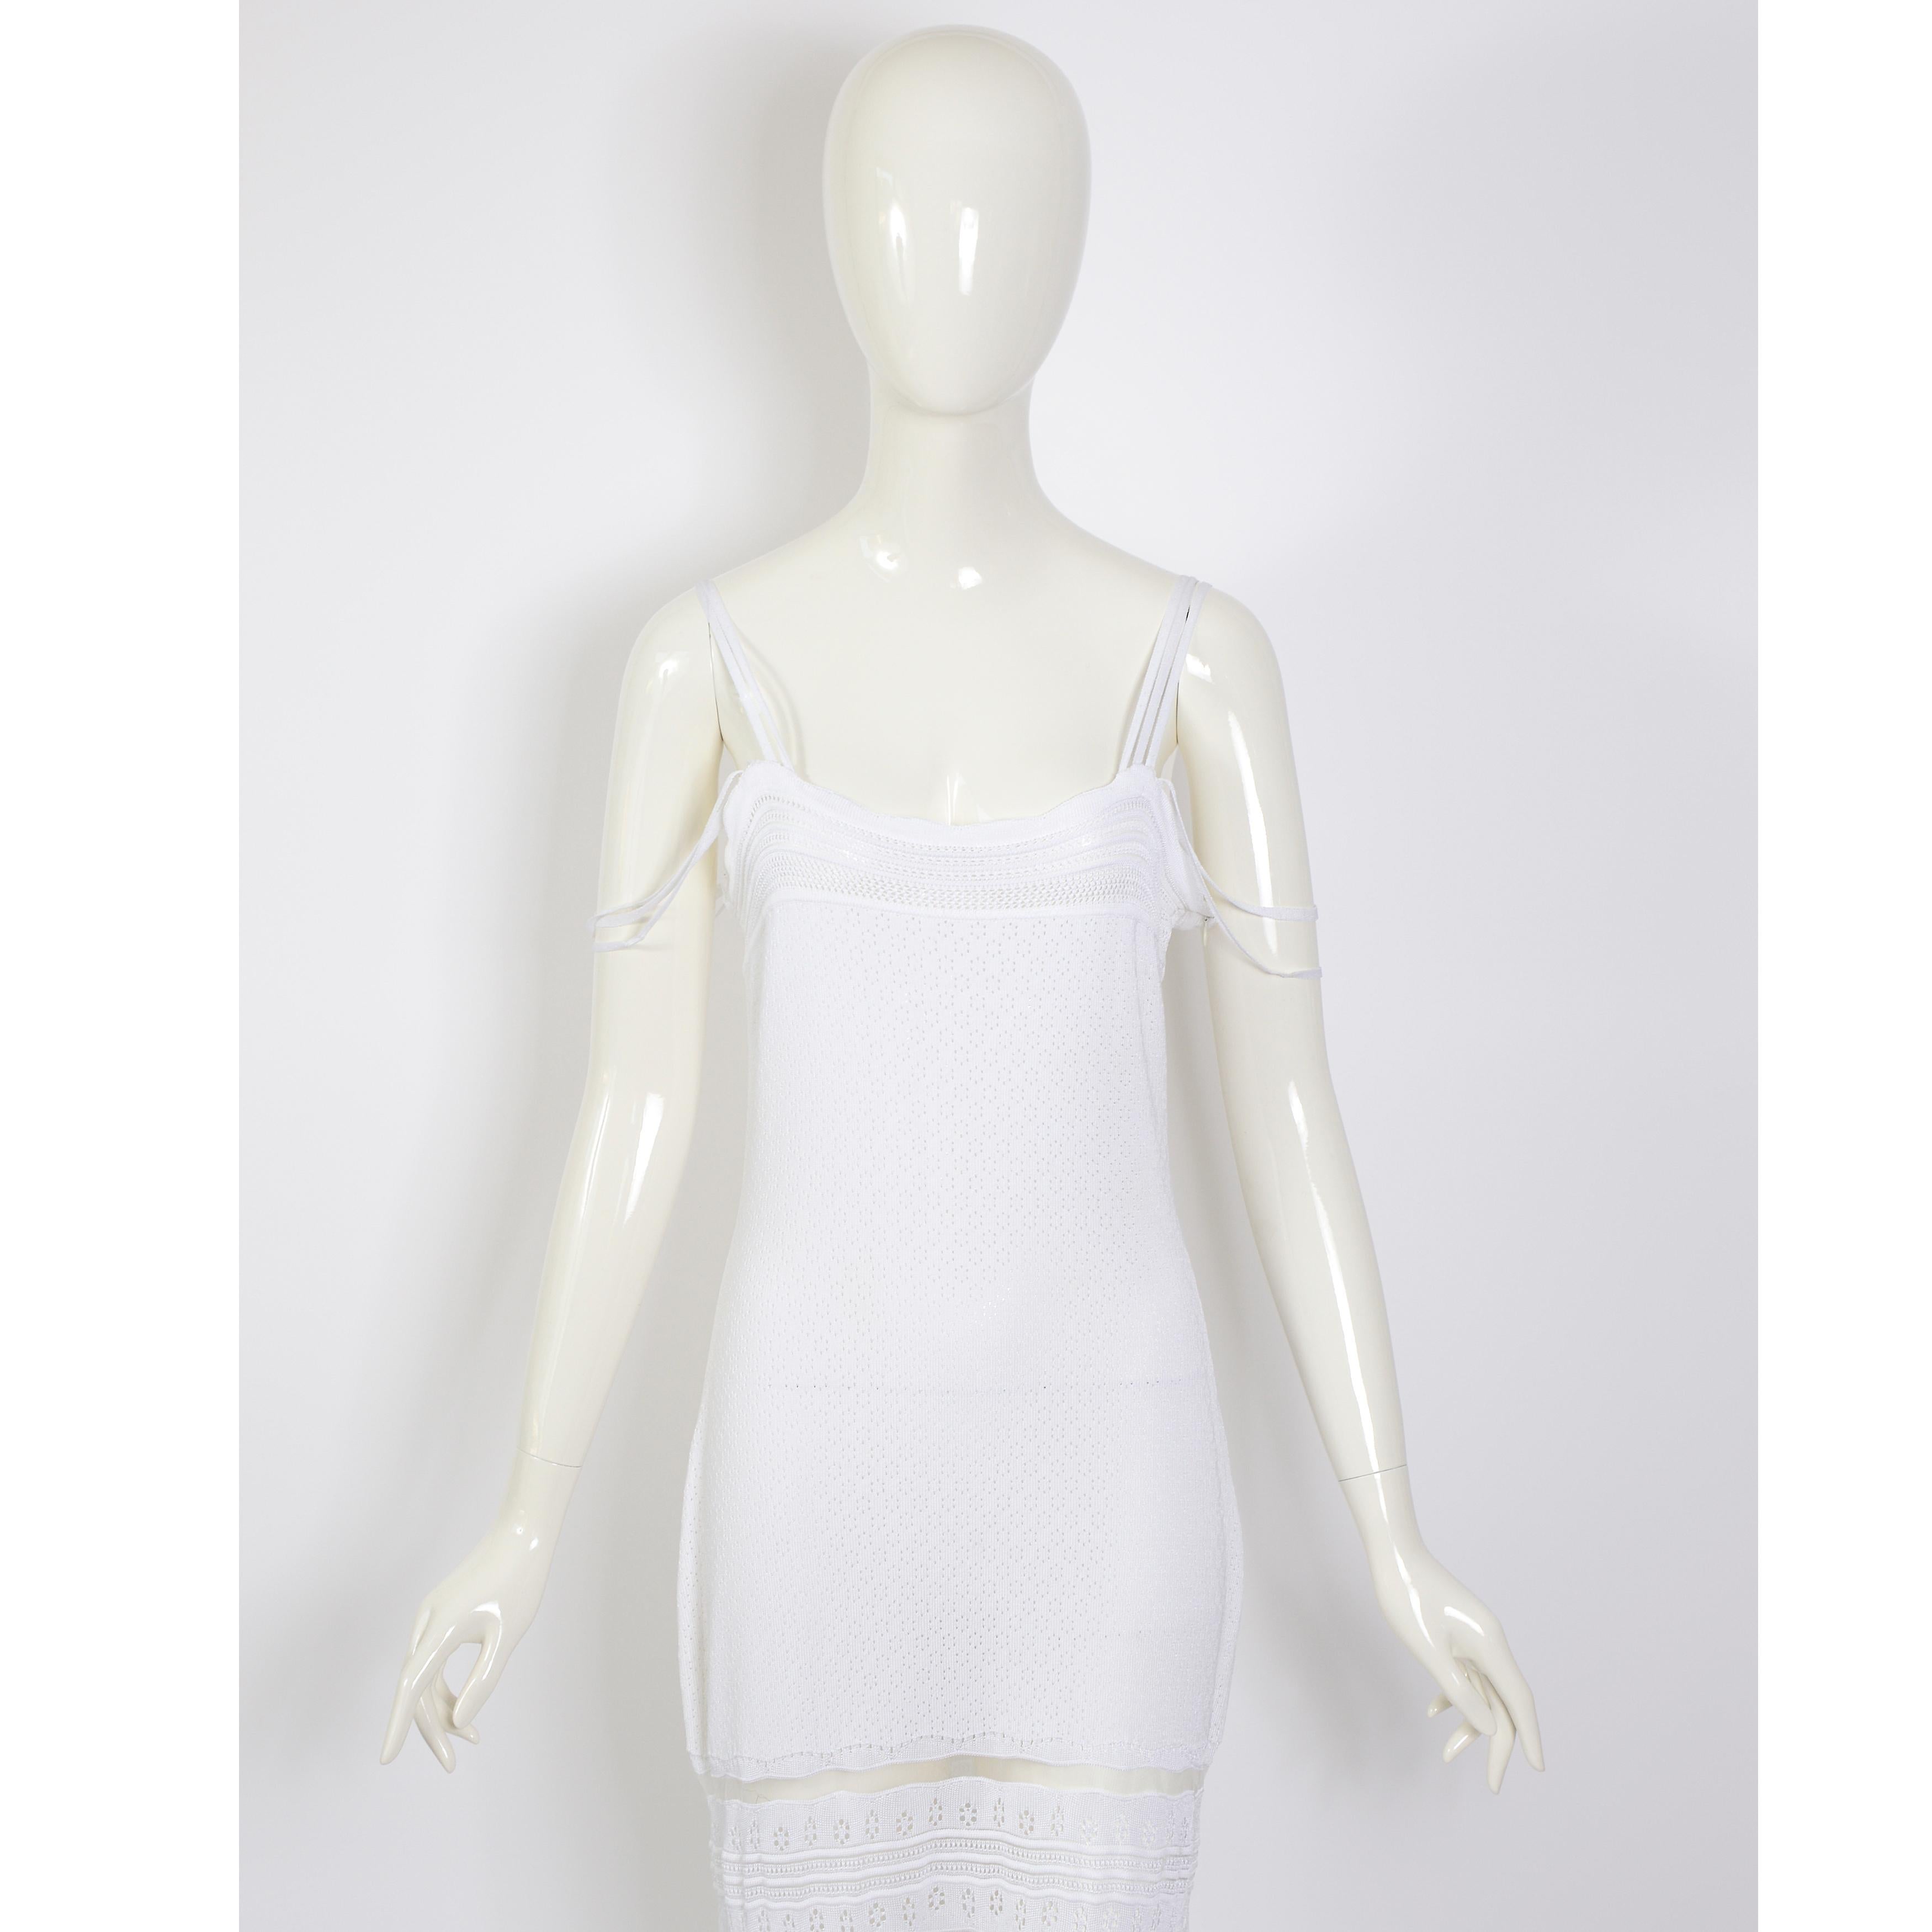 Women's  John Galliano S/S 1998 vintage white knit & mesh wedding or evening dress 